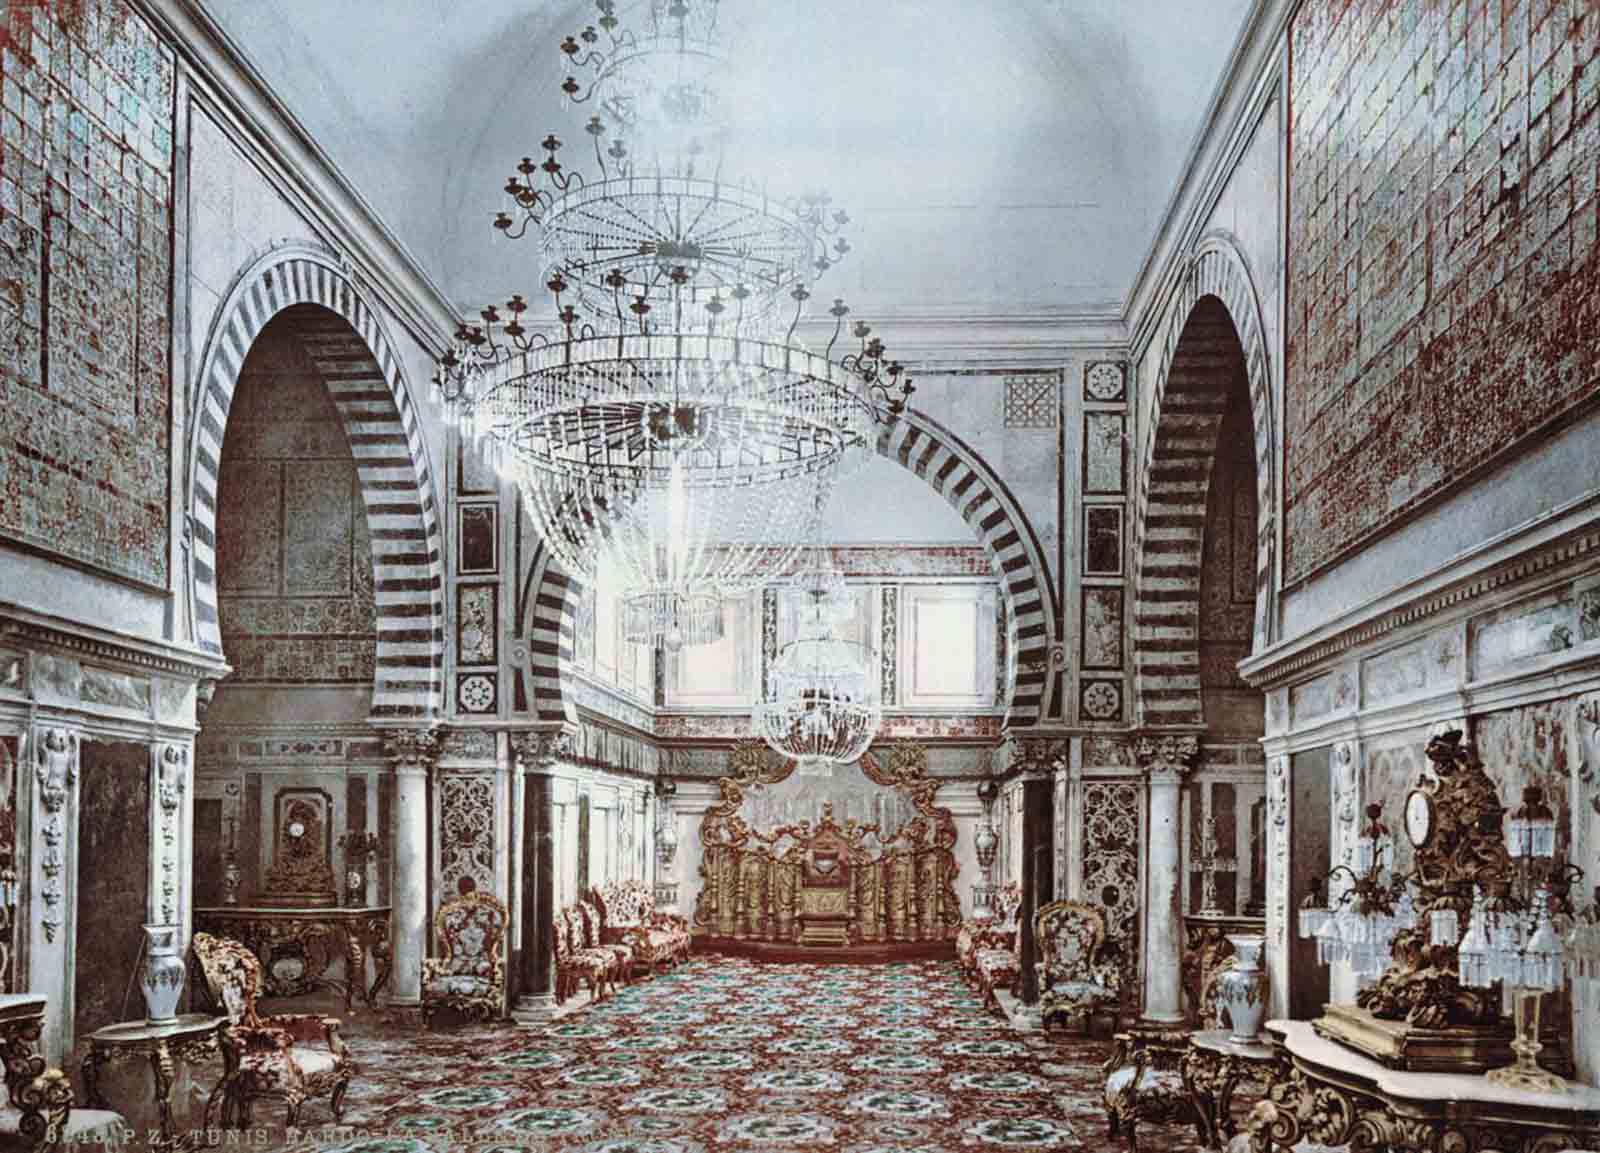 The throne room of Bardo Palace, Tunis.